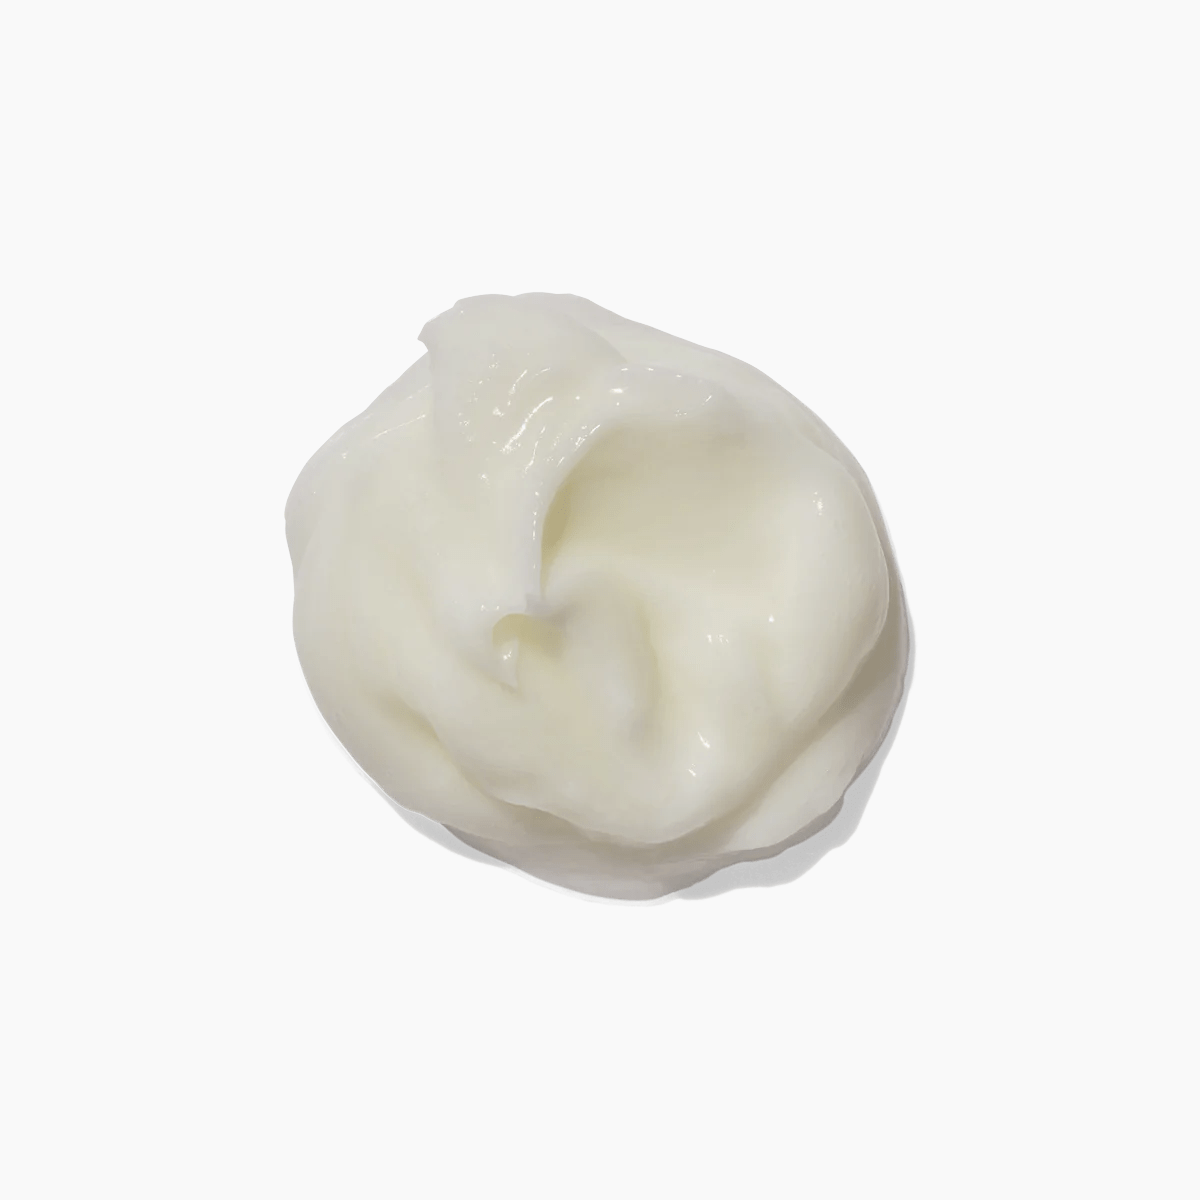 Haoma Restorative Deep Cream